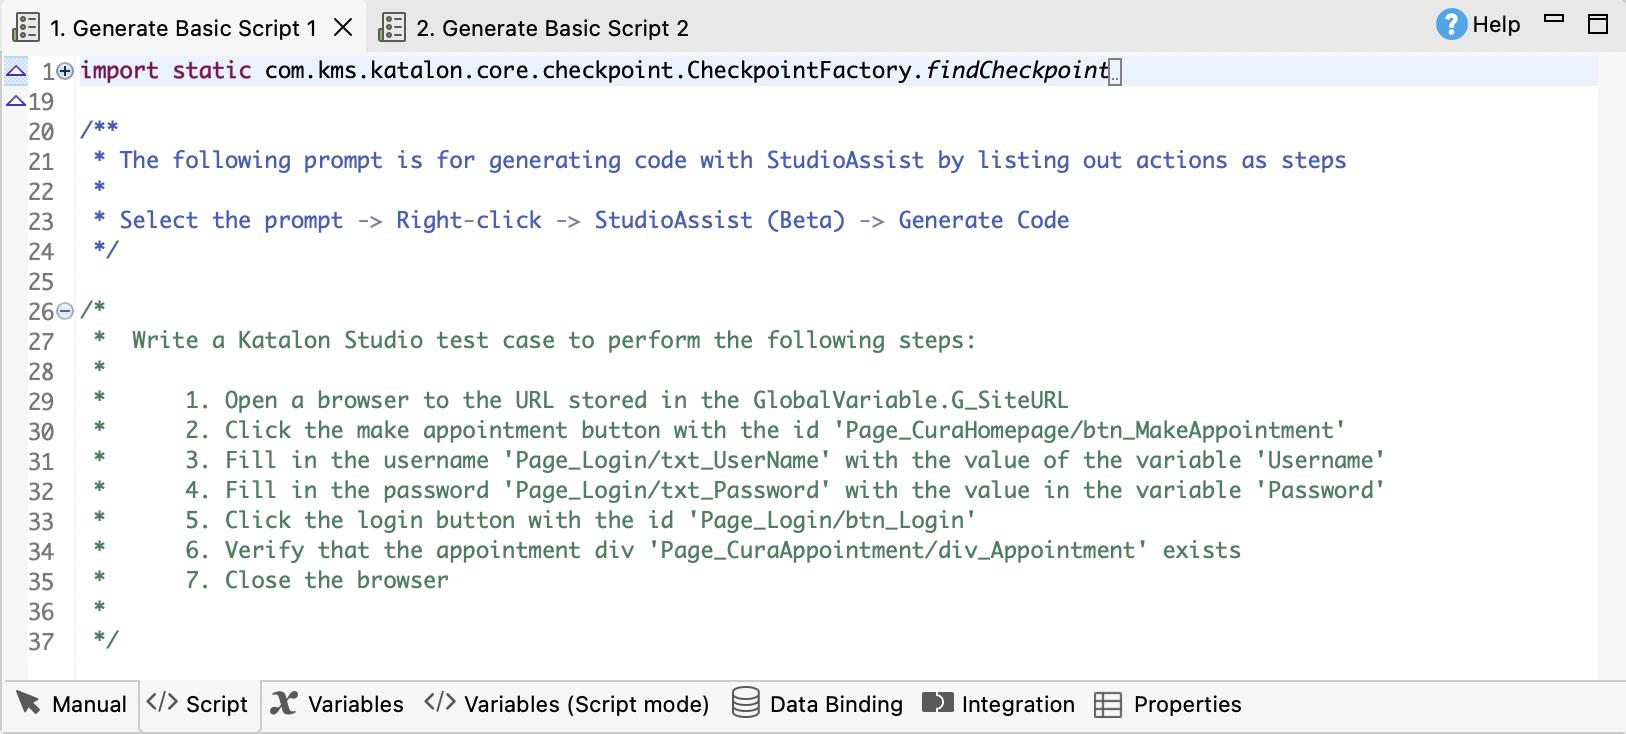 The Generate Basic Script 1 test case in Katalon Studio.